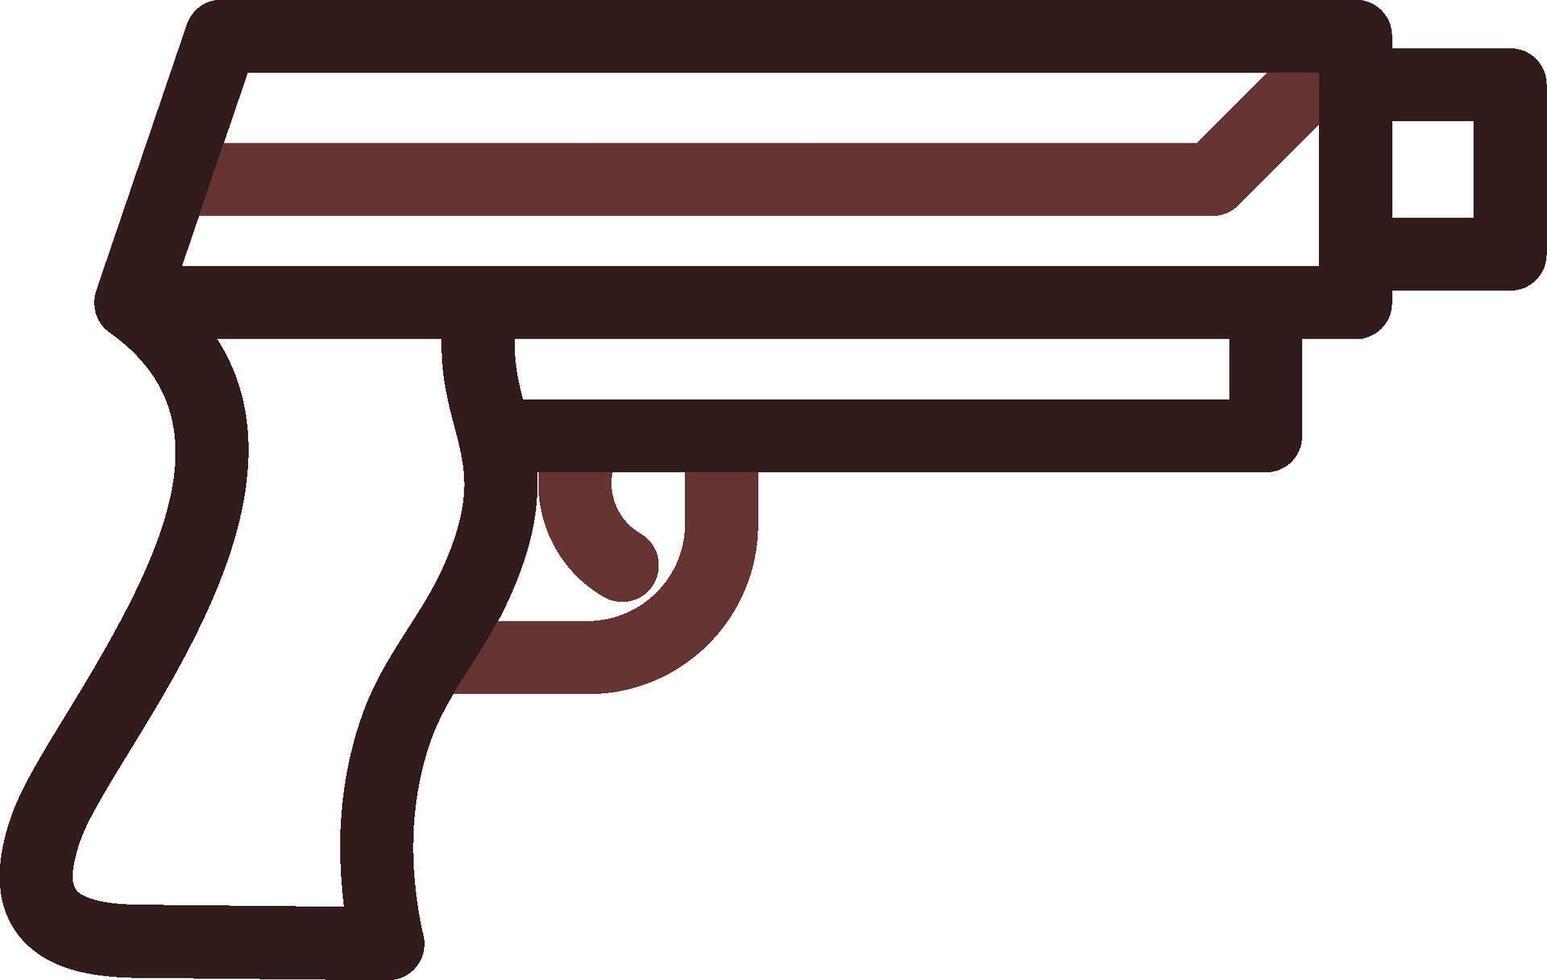 pistol kreativ ikon design vektor